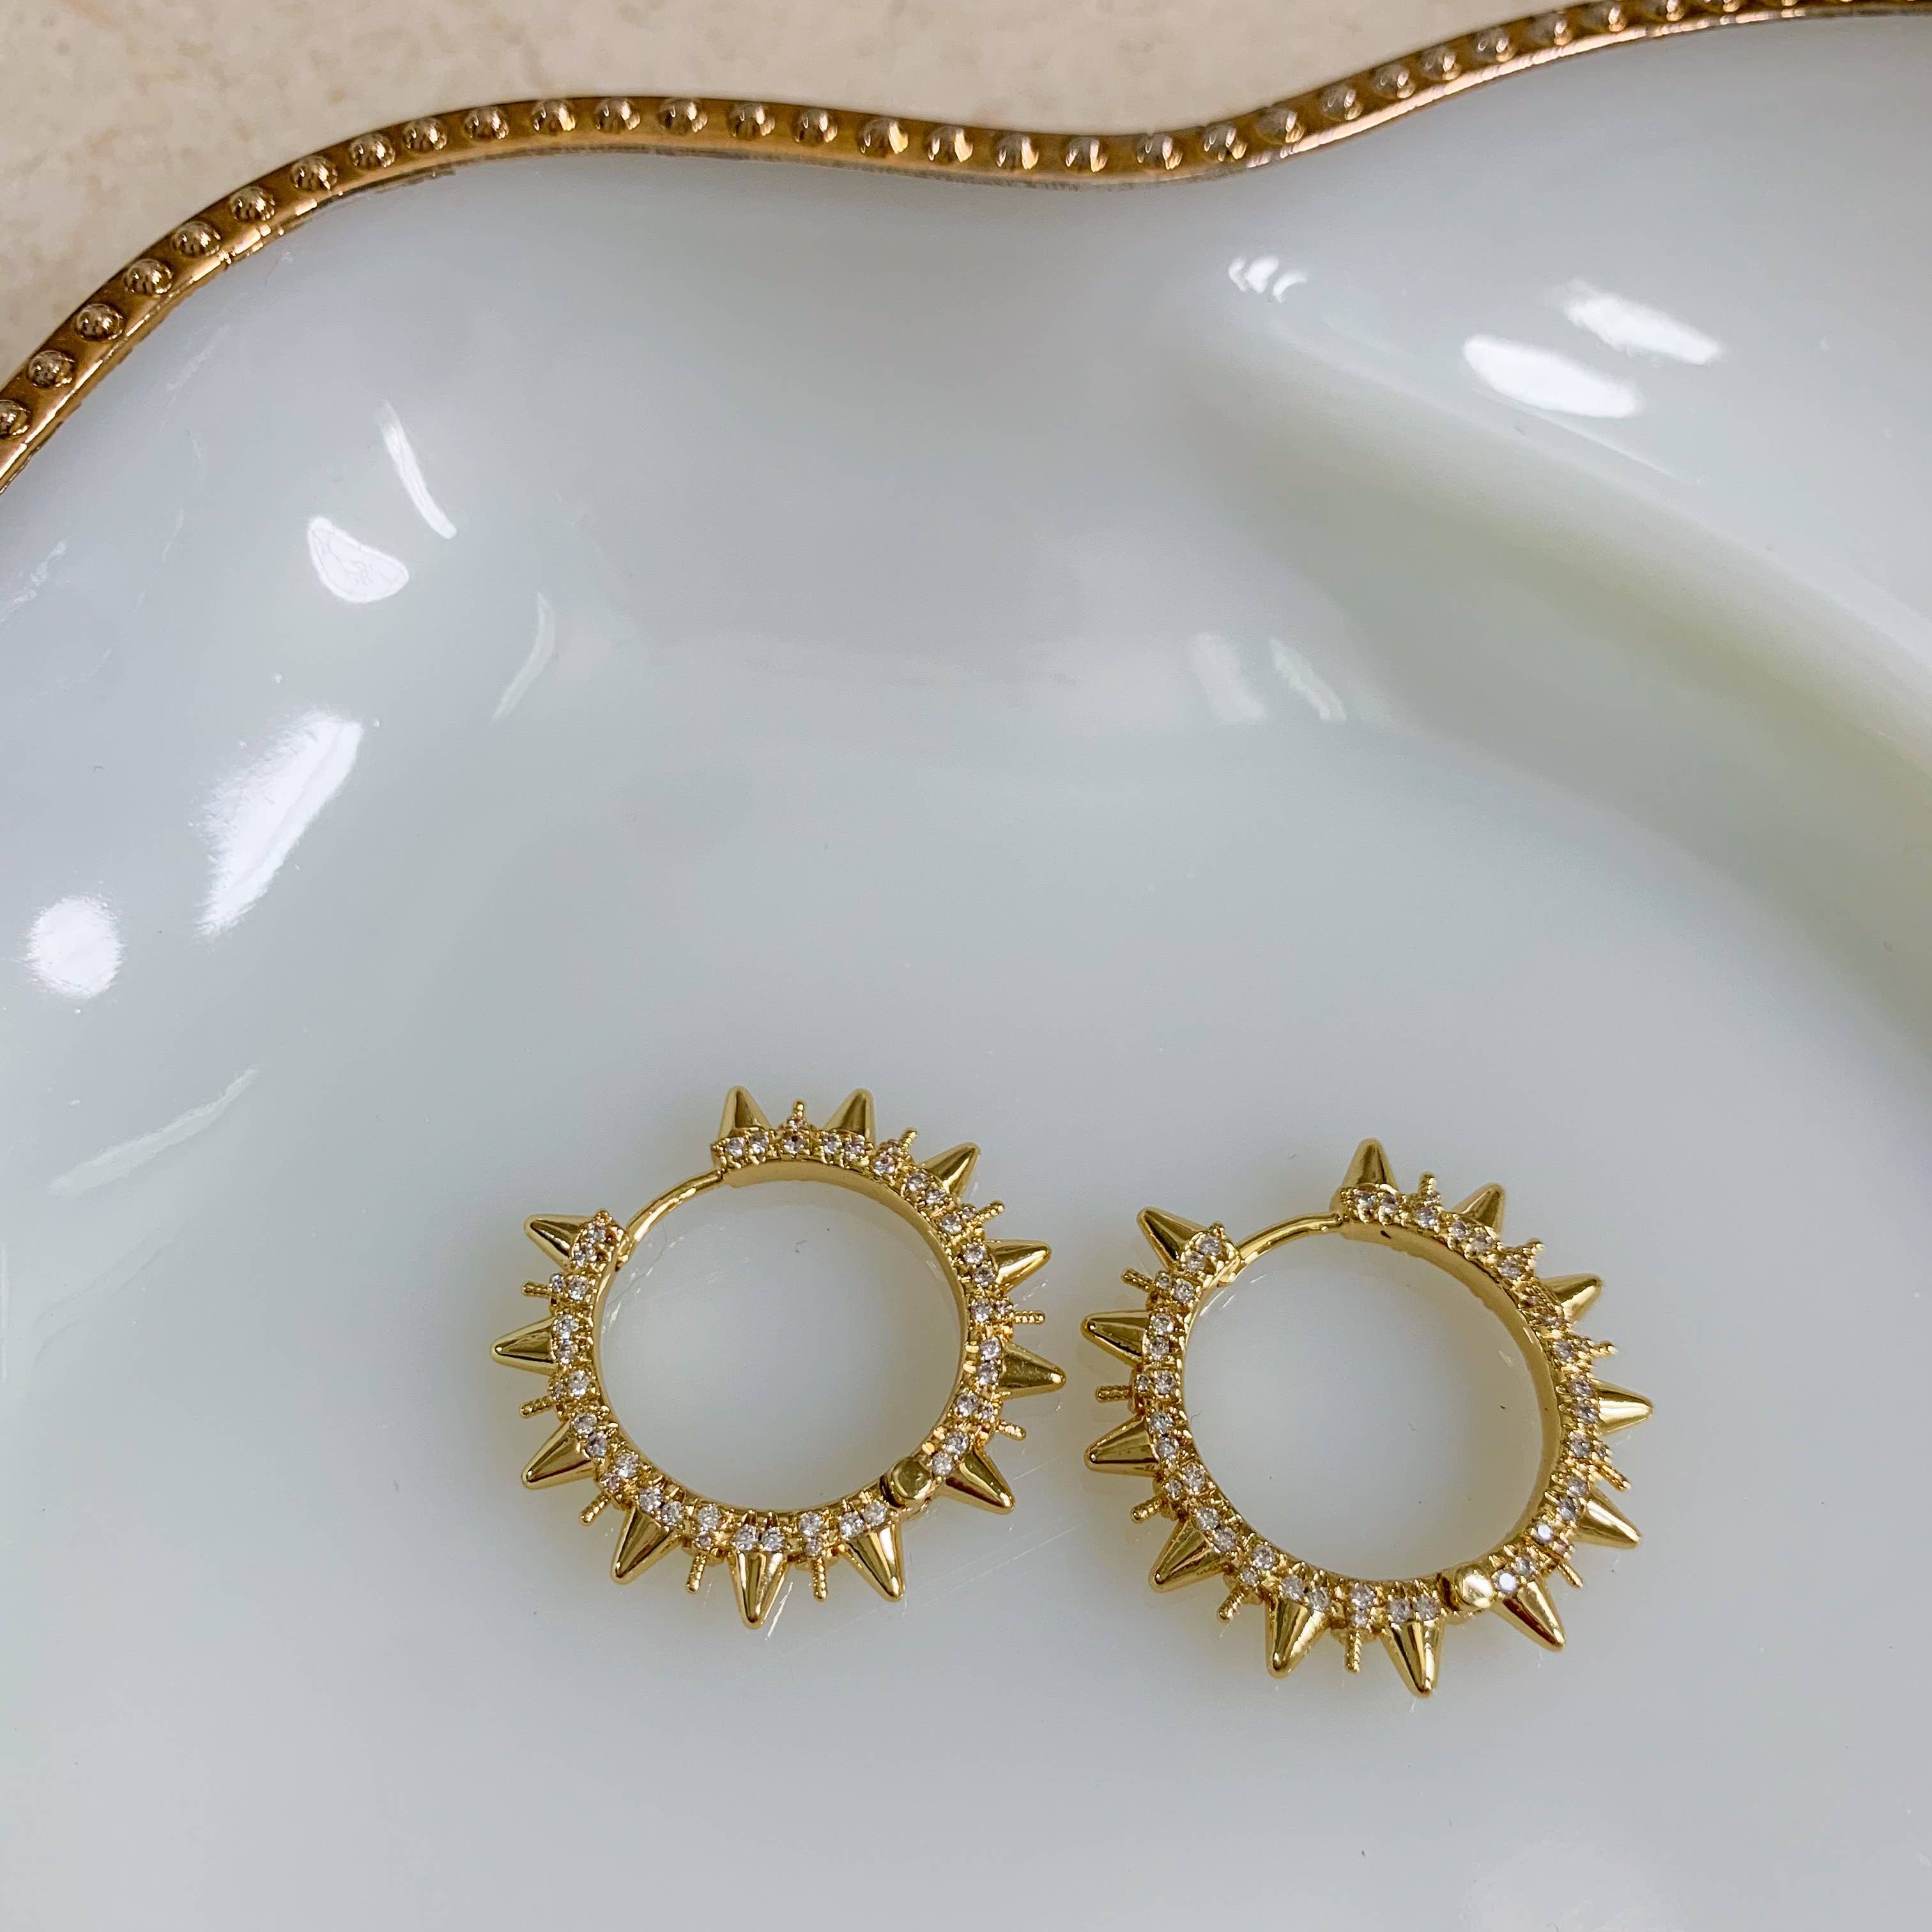 Clear Quartz Spike Hoop Earrings in Gold Fill Rose Gold Fill or Silver